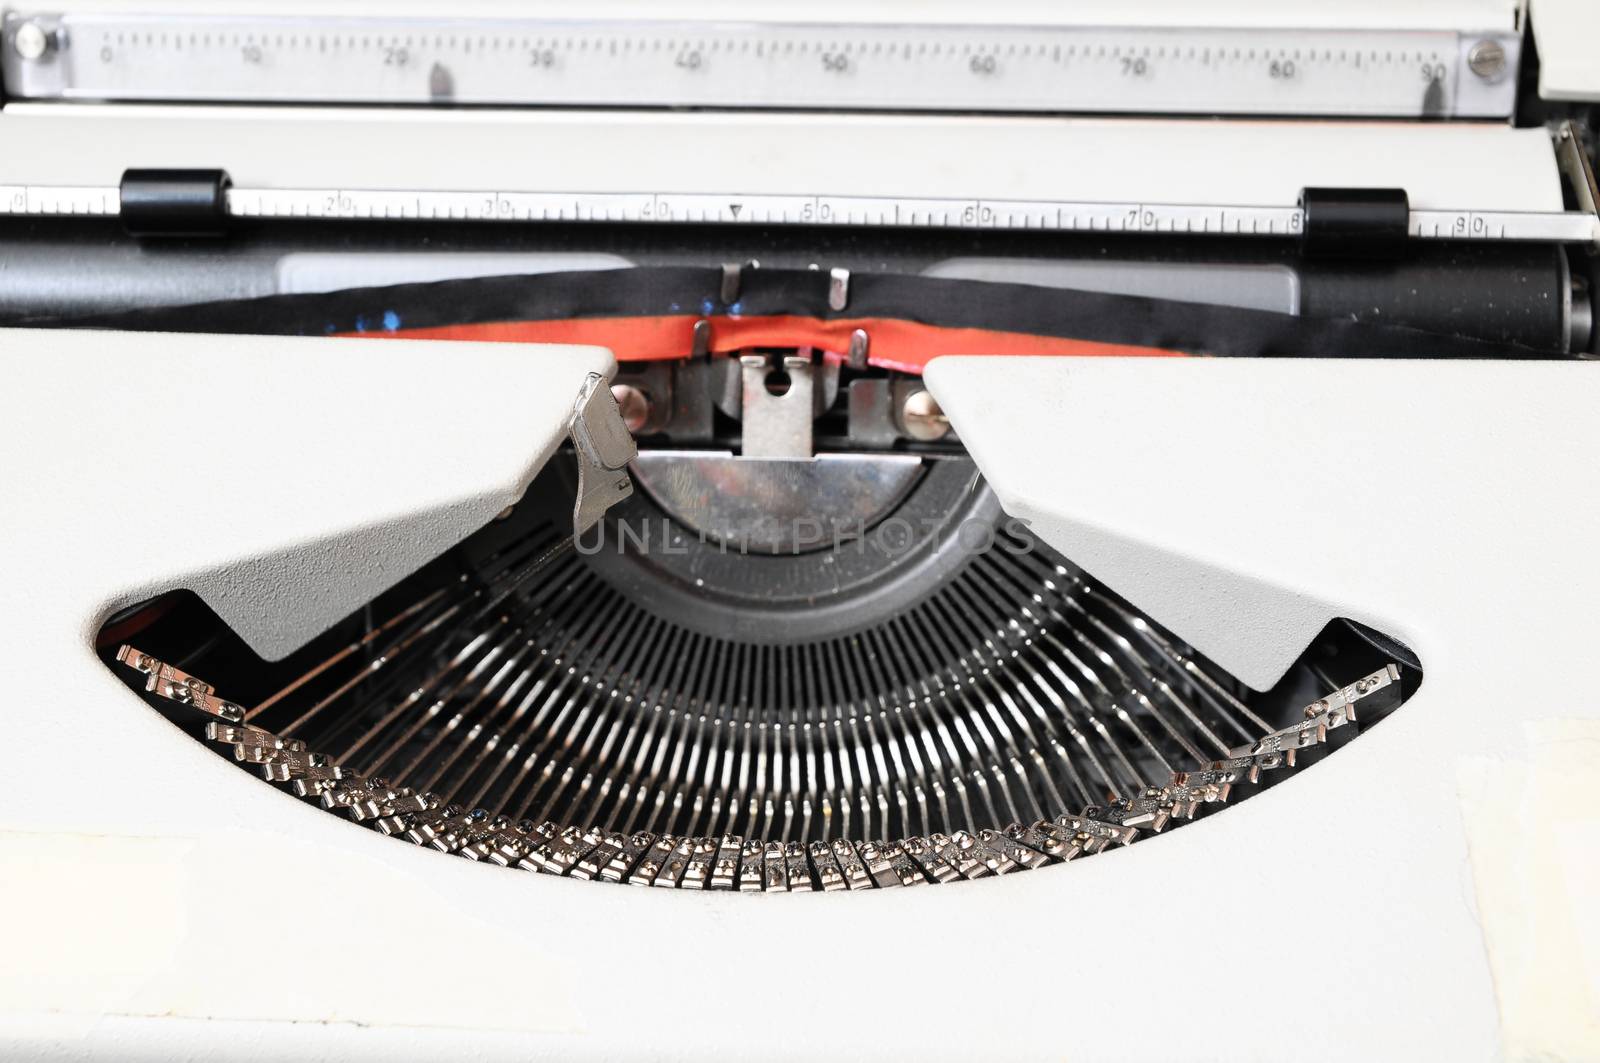 An Old Travel Vintage Typewriter on a Black Background